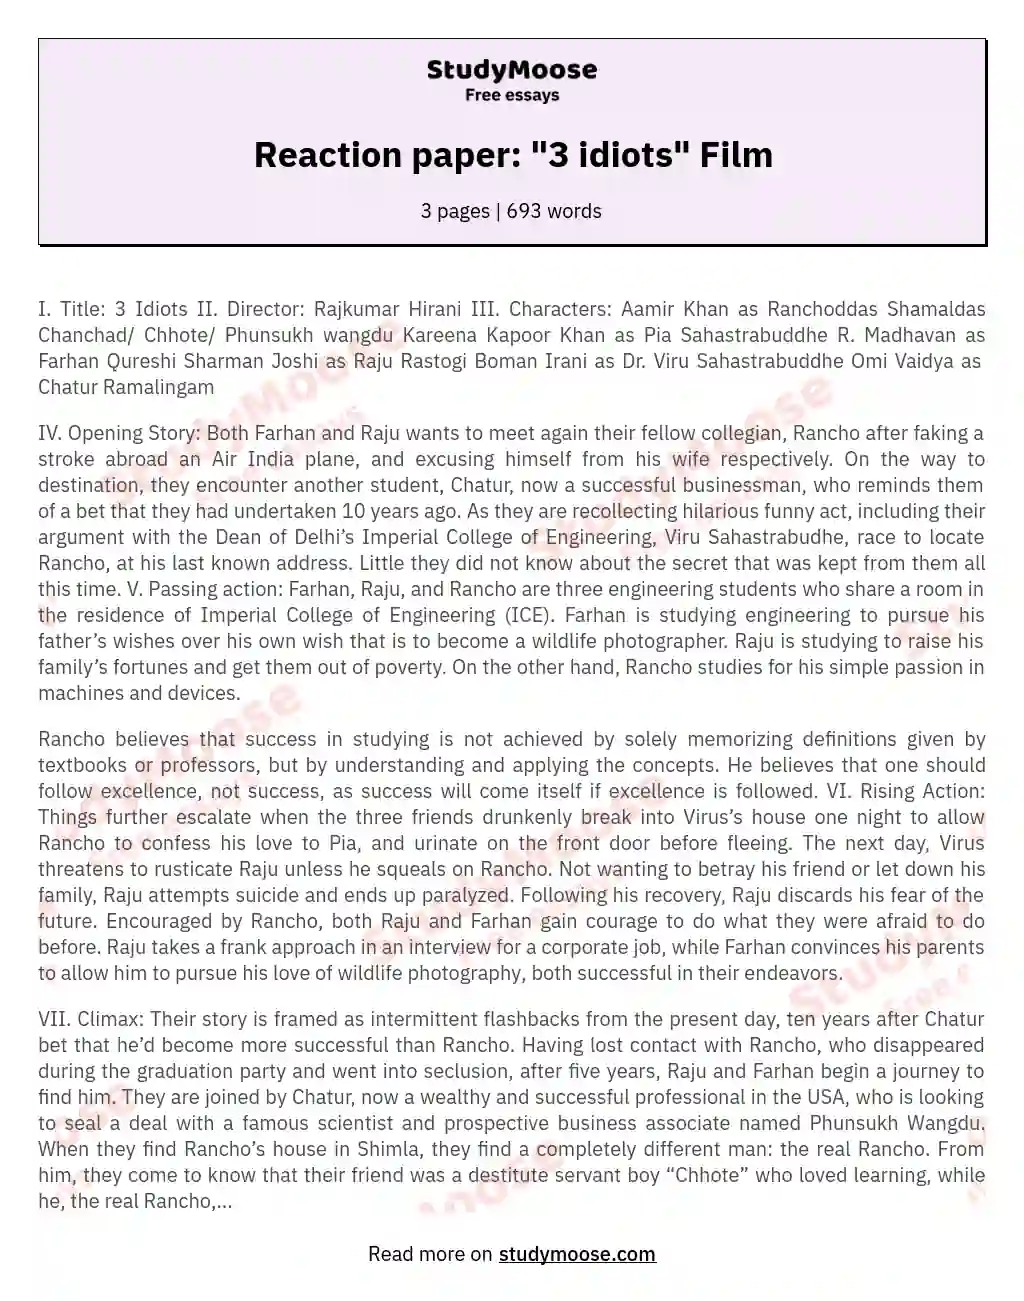 Reaction paper: "3 idiots" Film